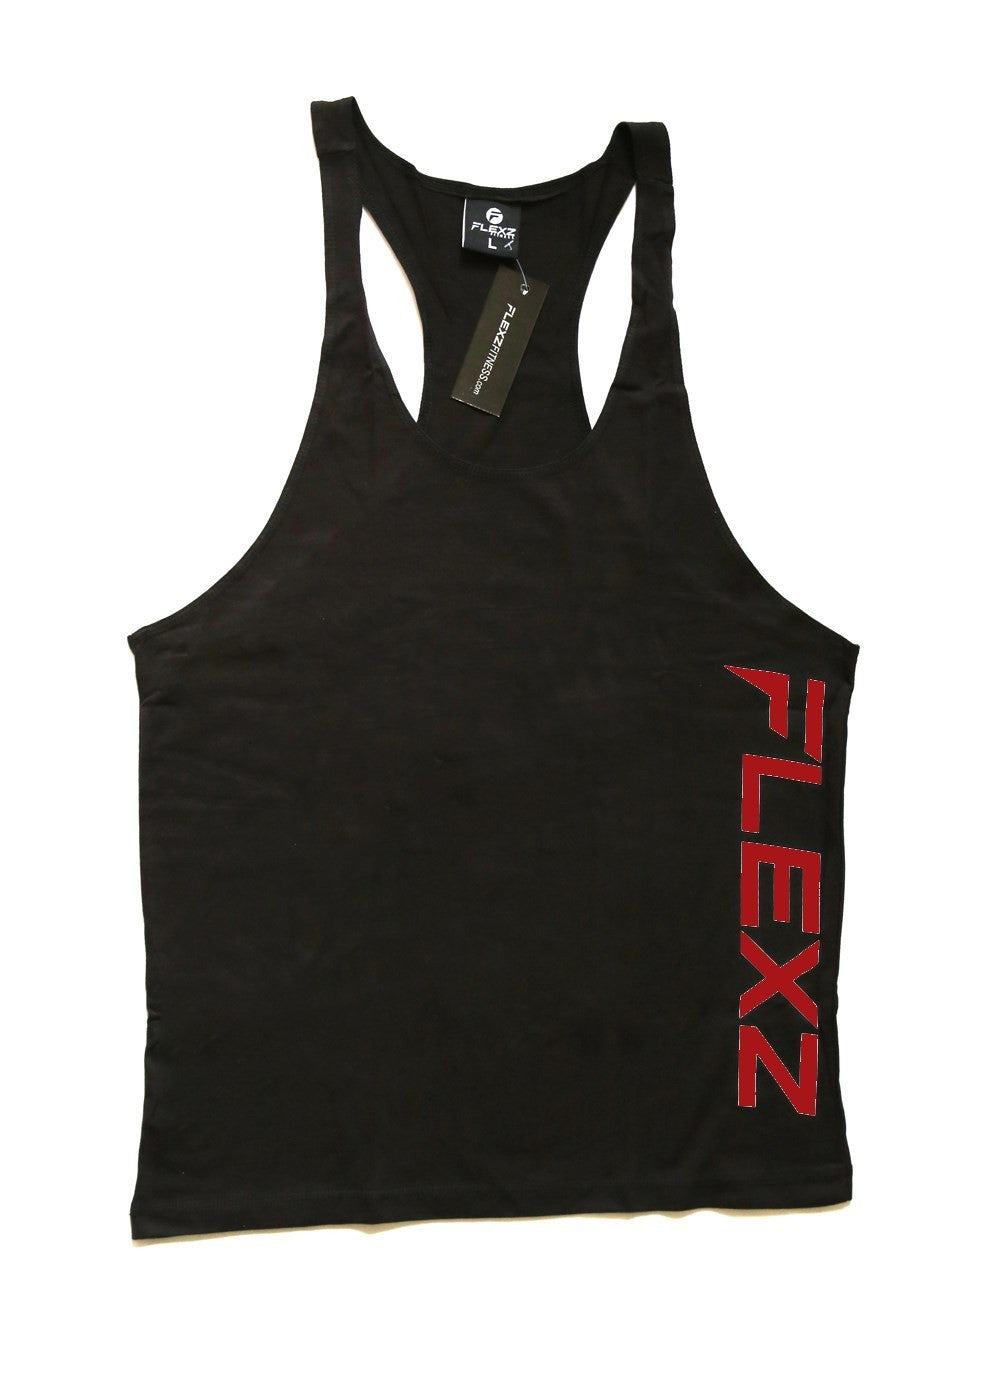 Flexz Singlet - Black/Red | Flexz Fitness